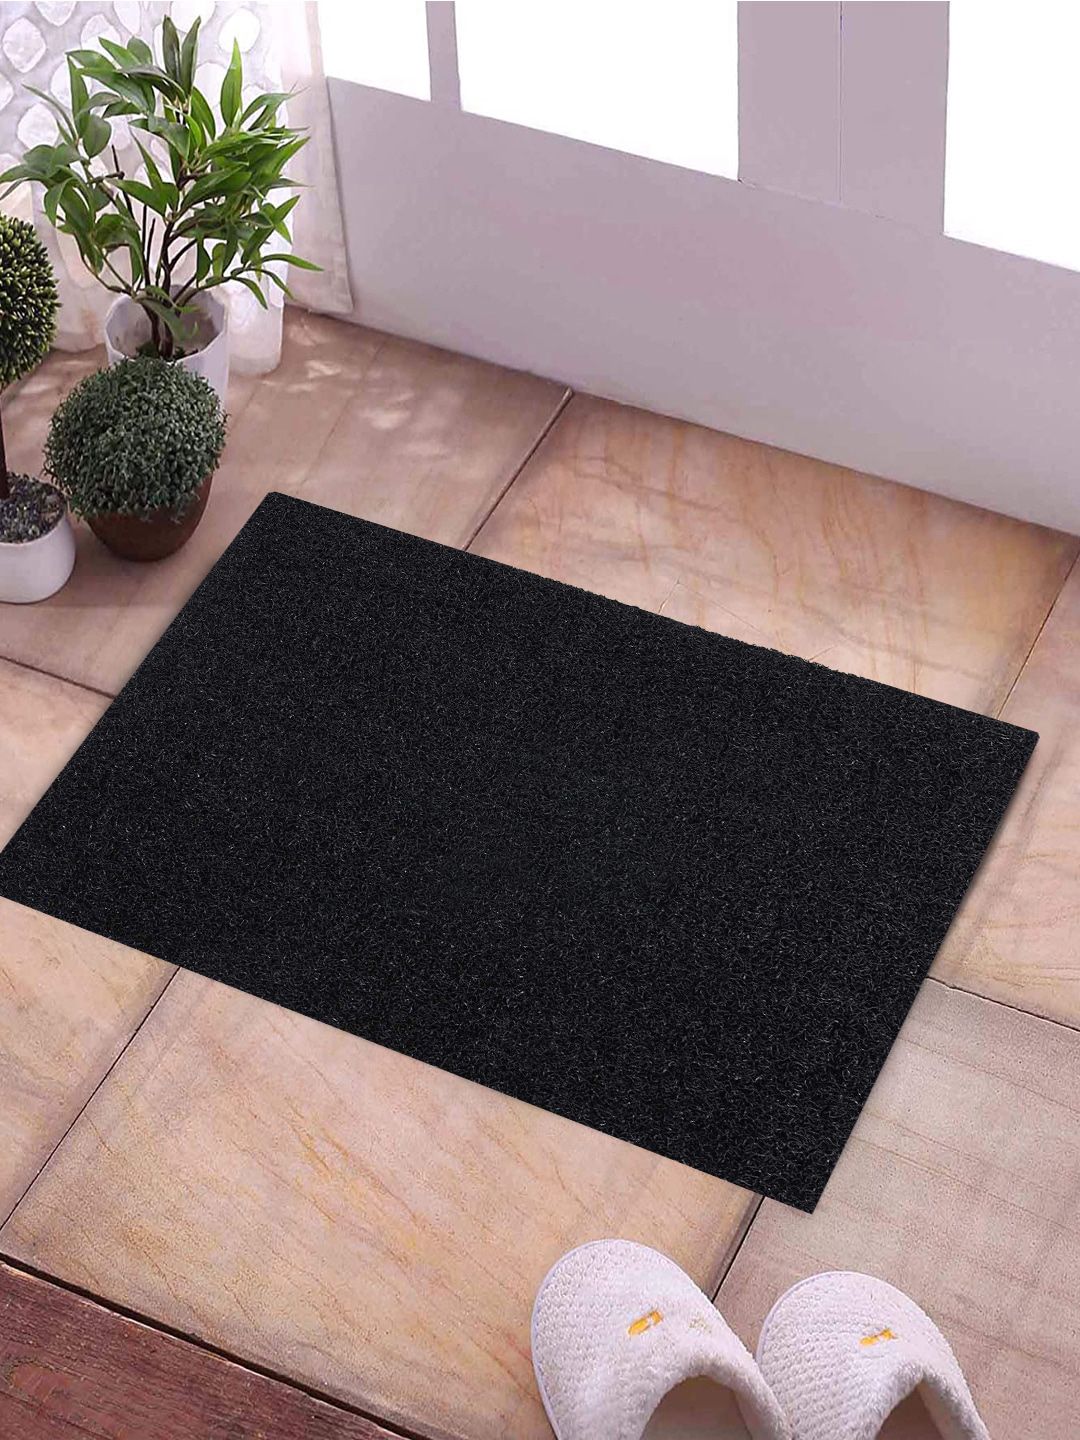 Kuber Industries Black Solid Rubber Anti-Skid Doormat Price in India